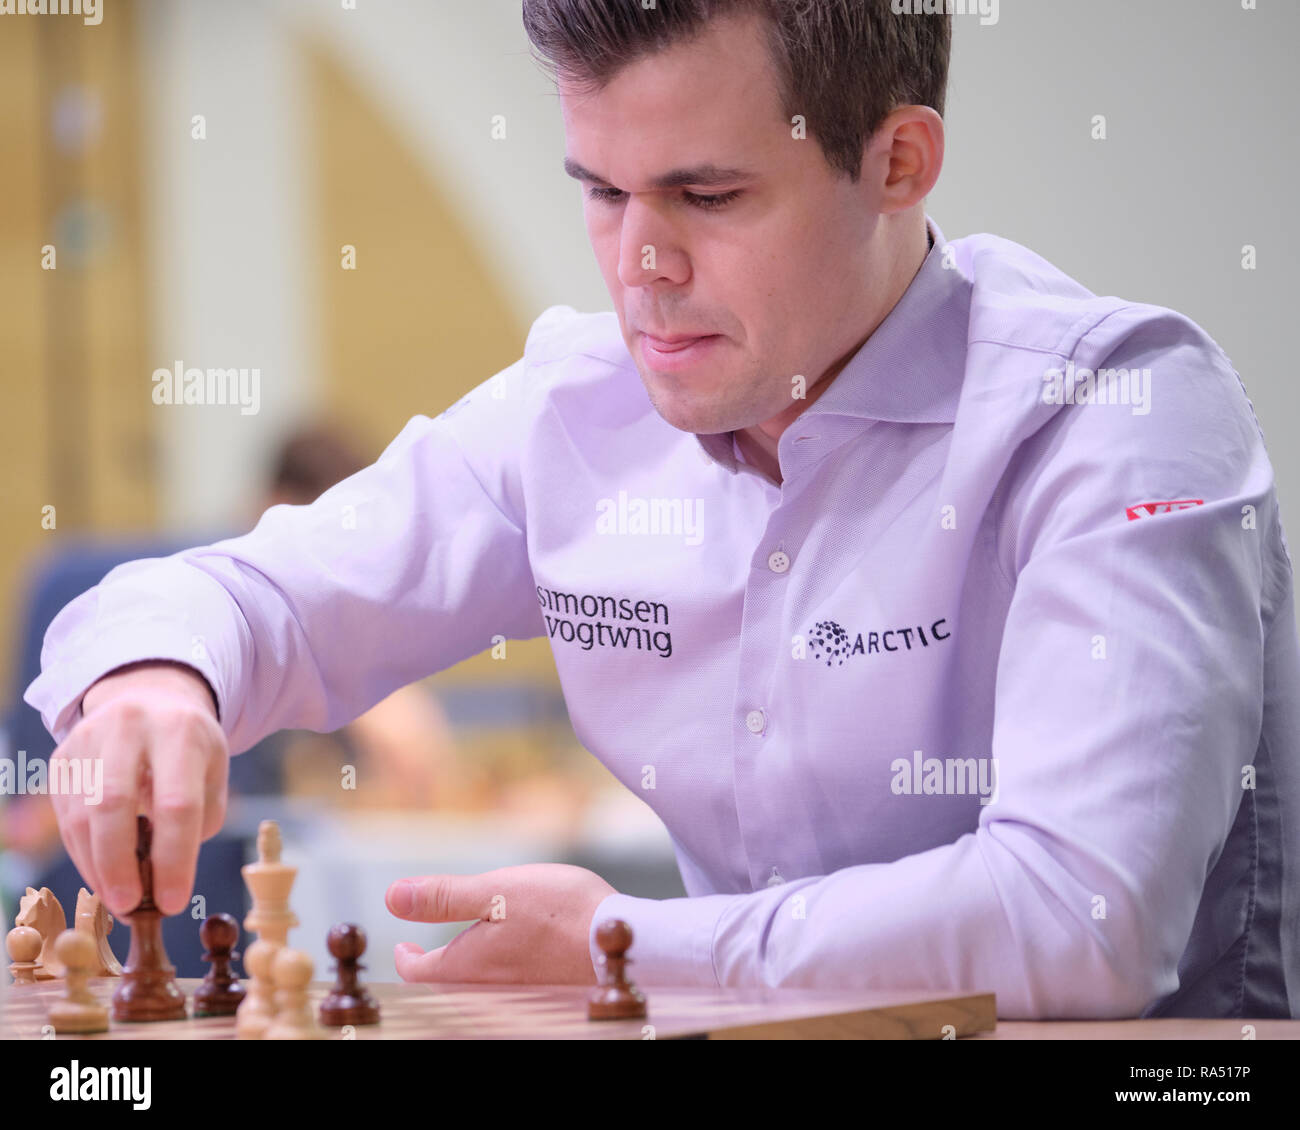 The GAME Made Magnus Carlsen World Blitz Chess Champion in